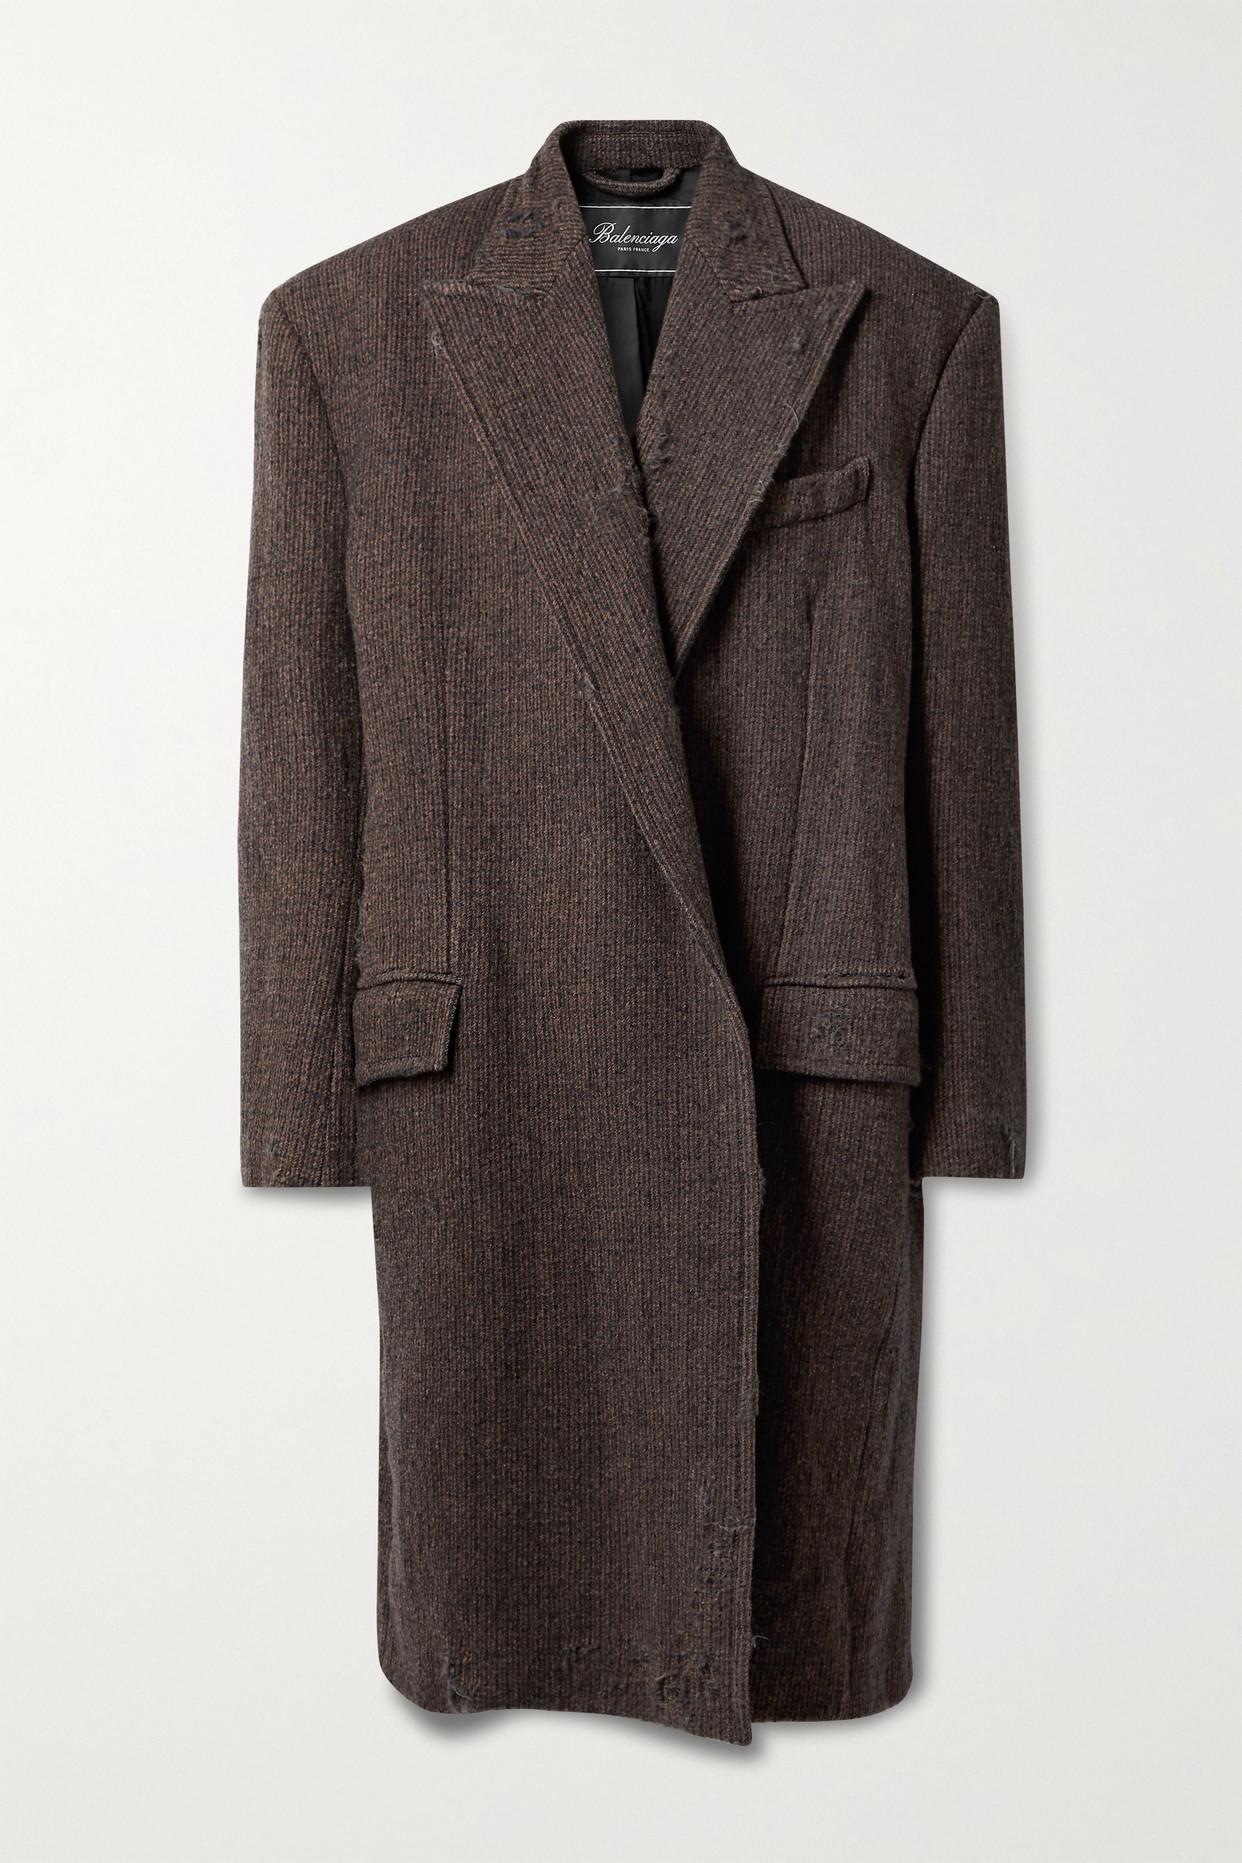 Balenciaga Oversized Distressed Wool-tweed Coat in Brown | Lyst